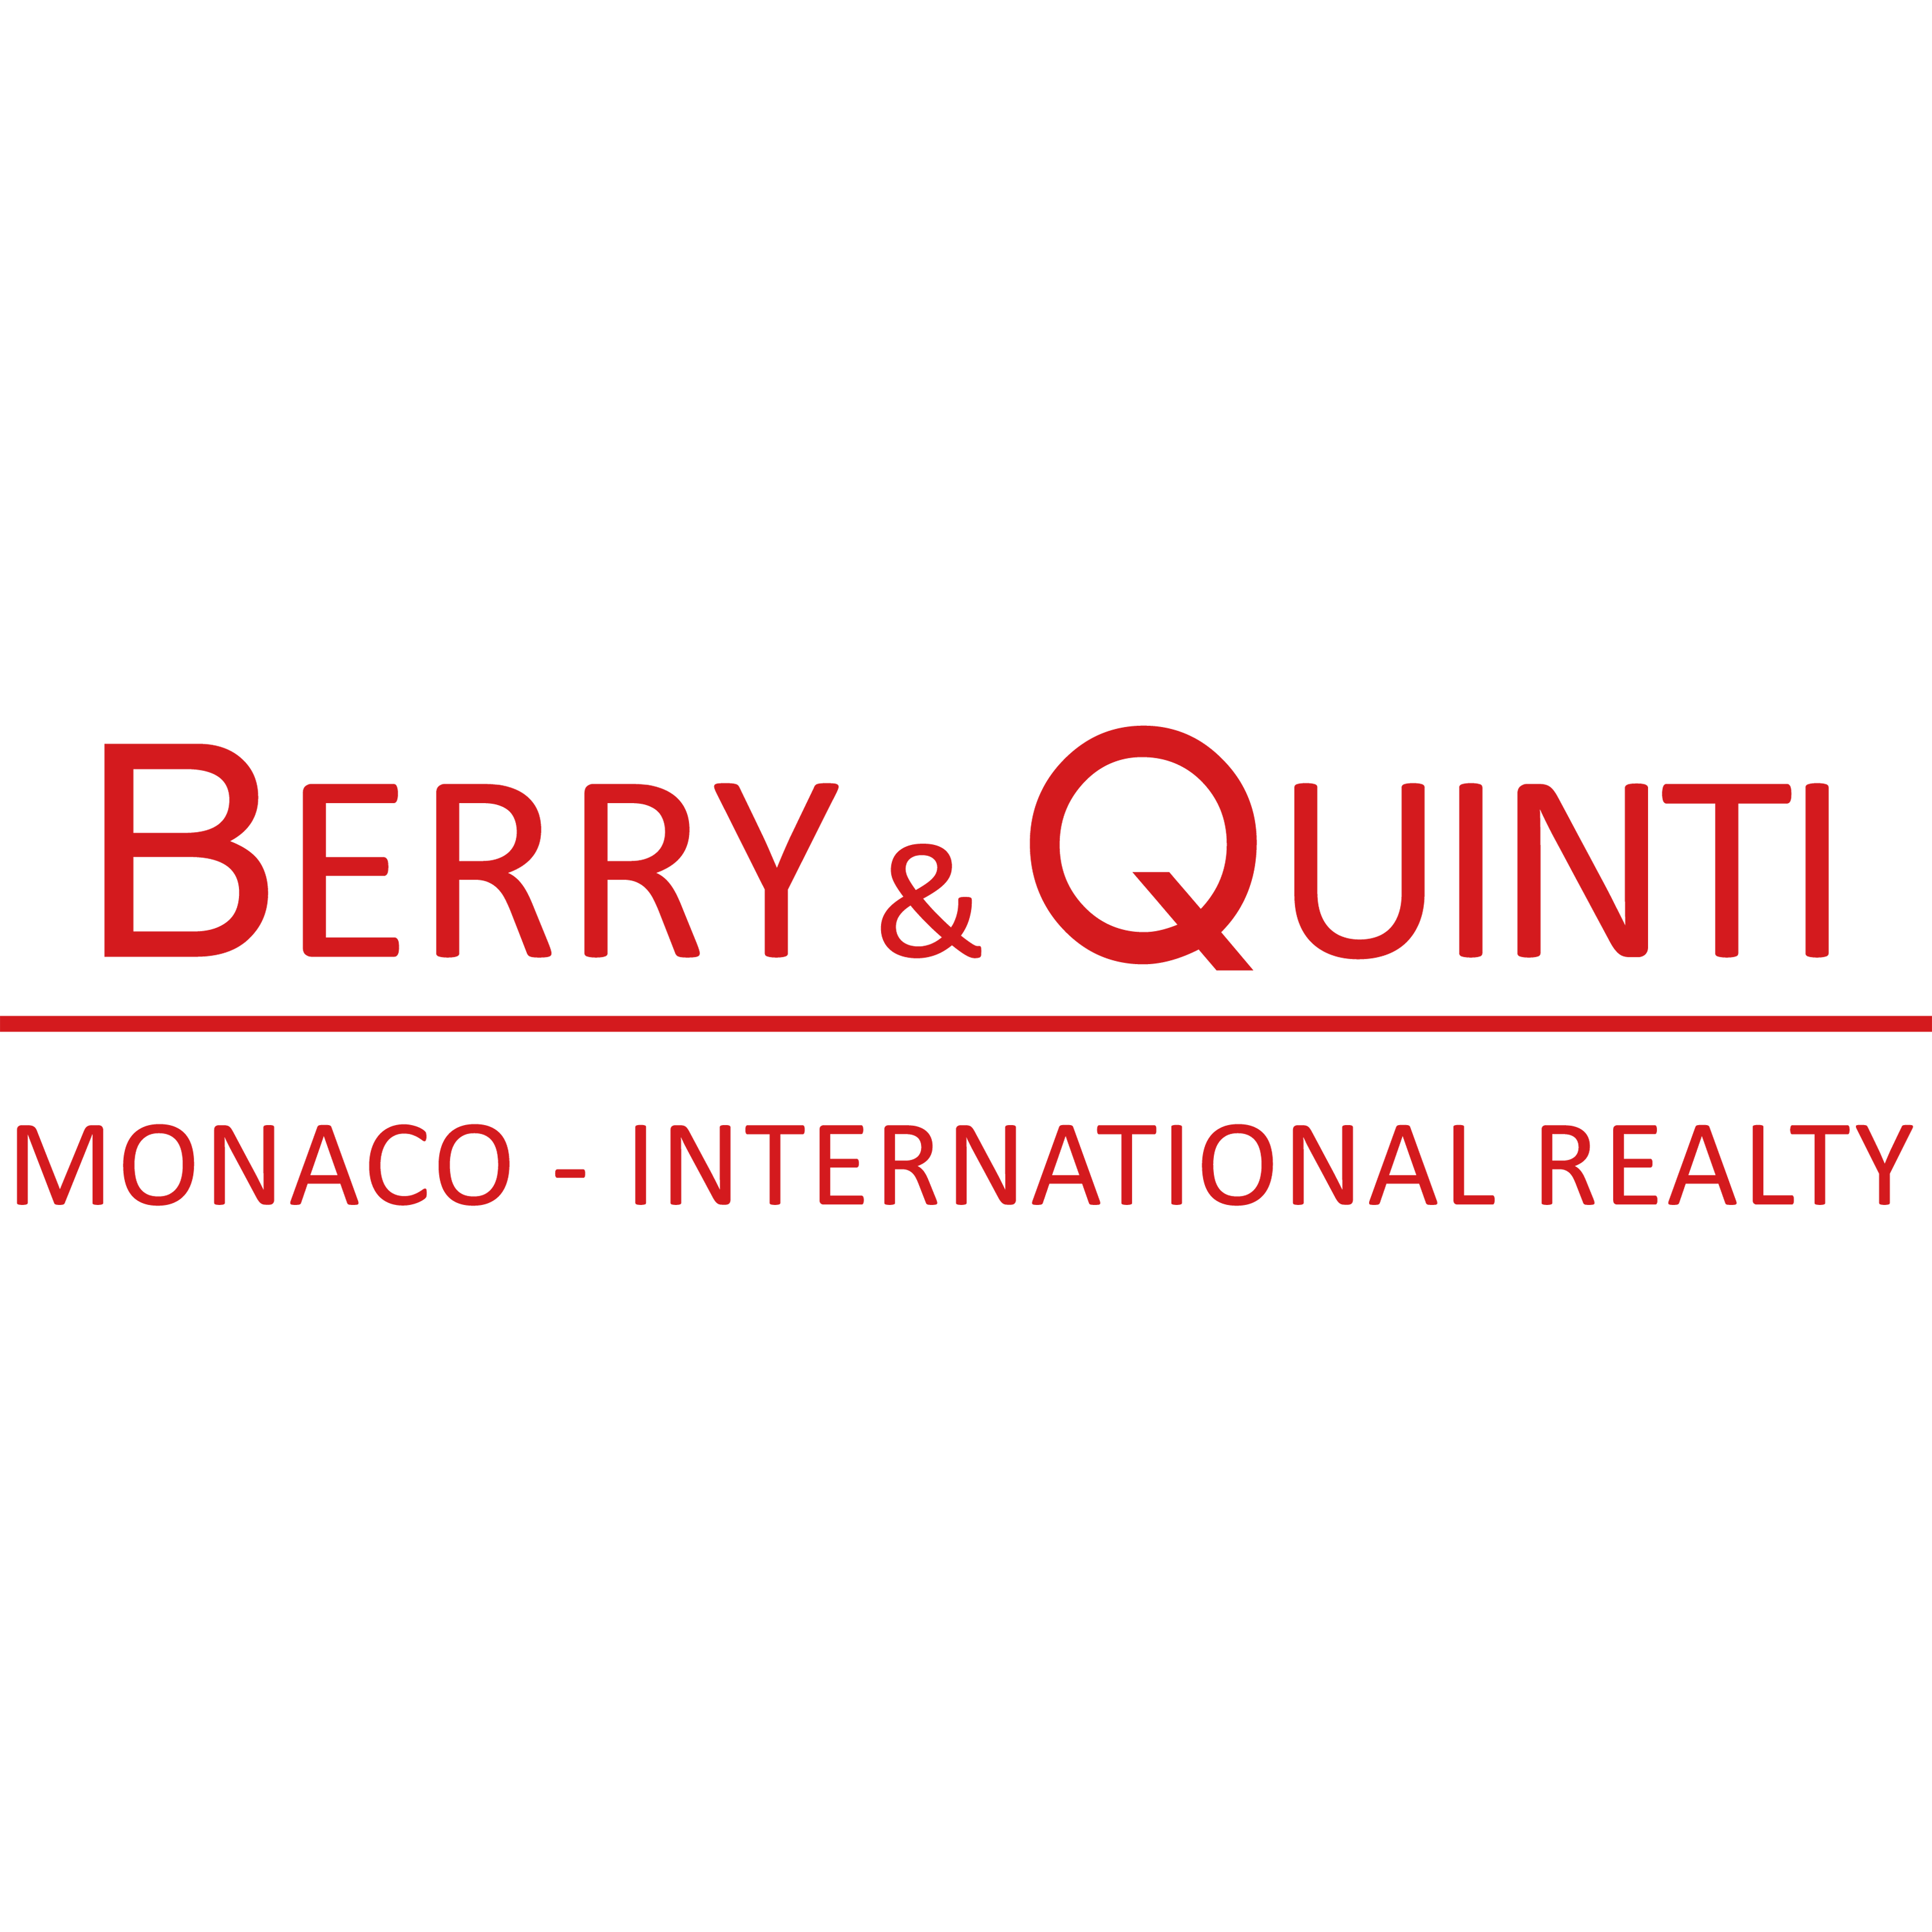 Berry & Quinti Monaco International Realty